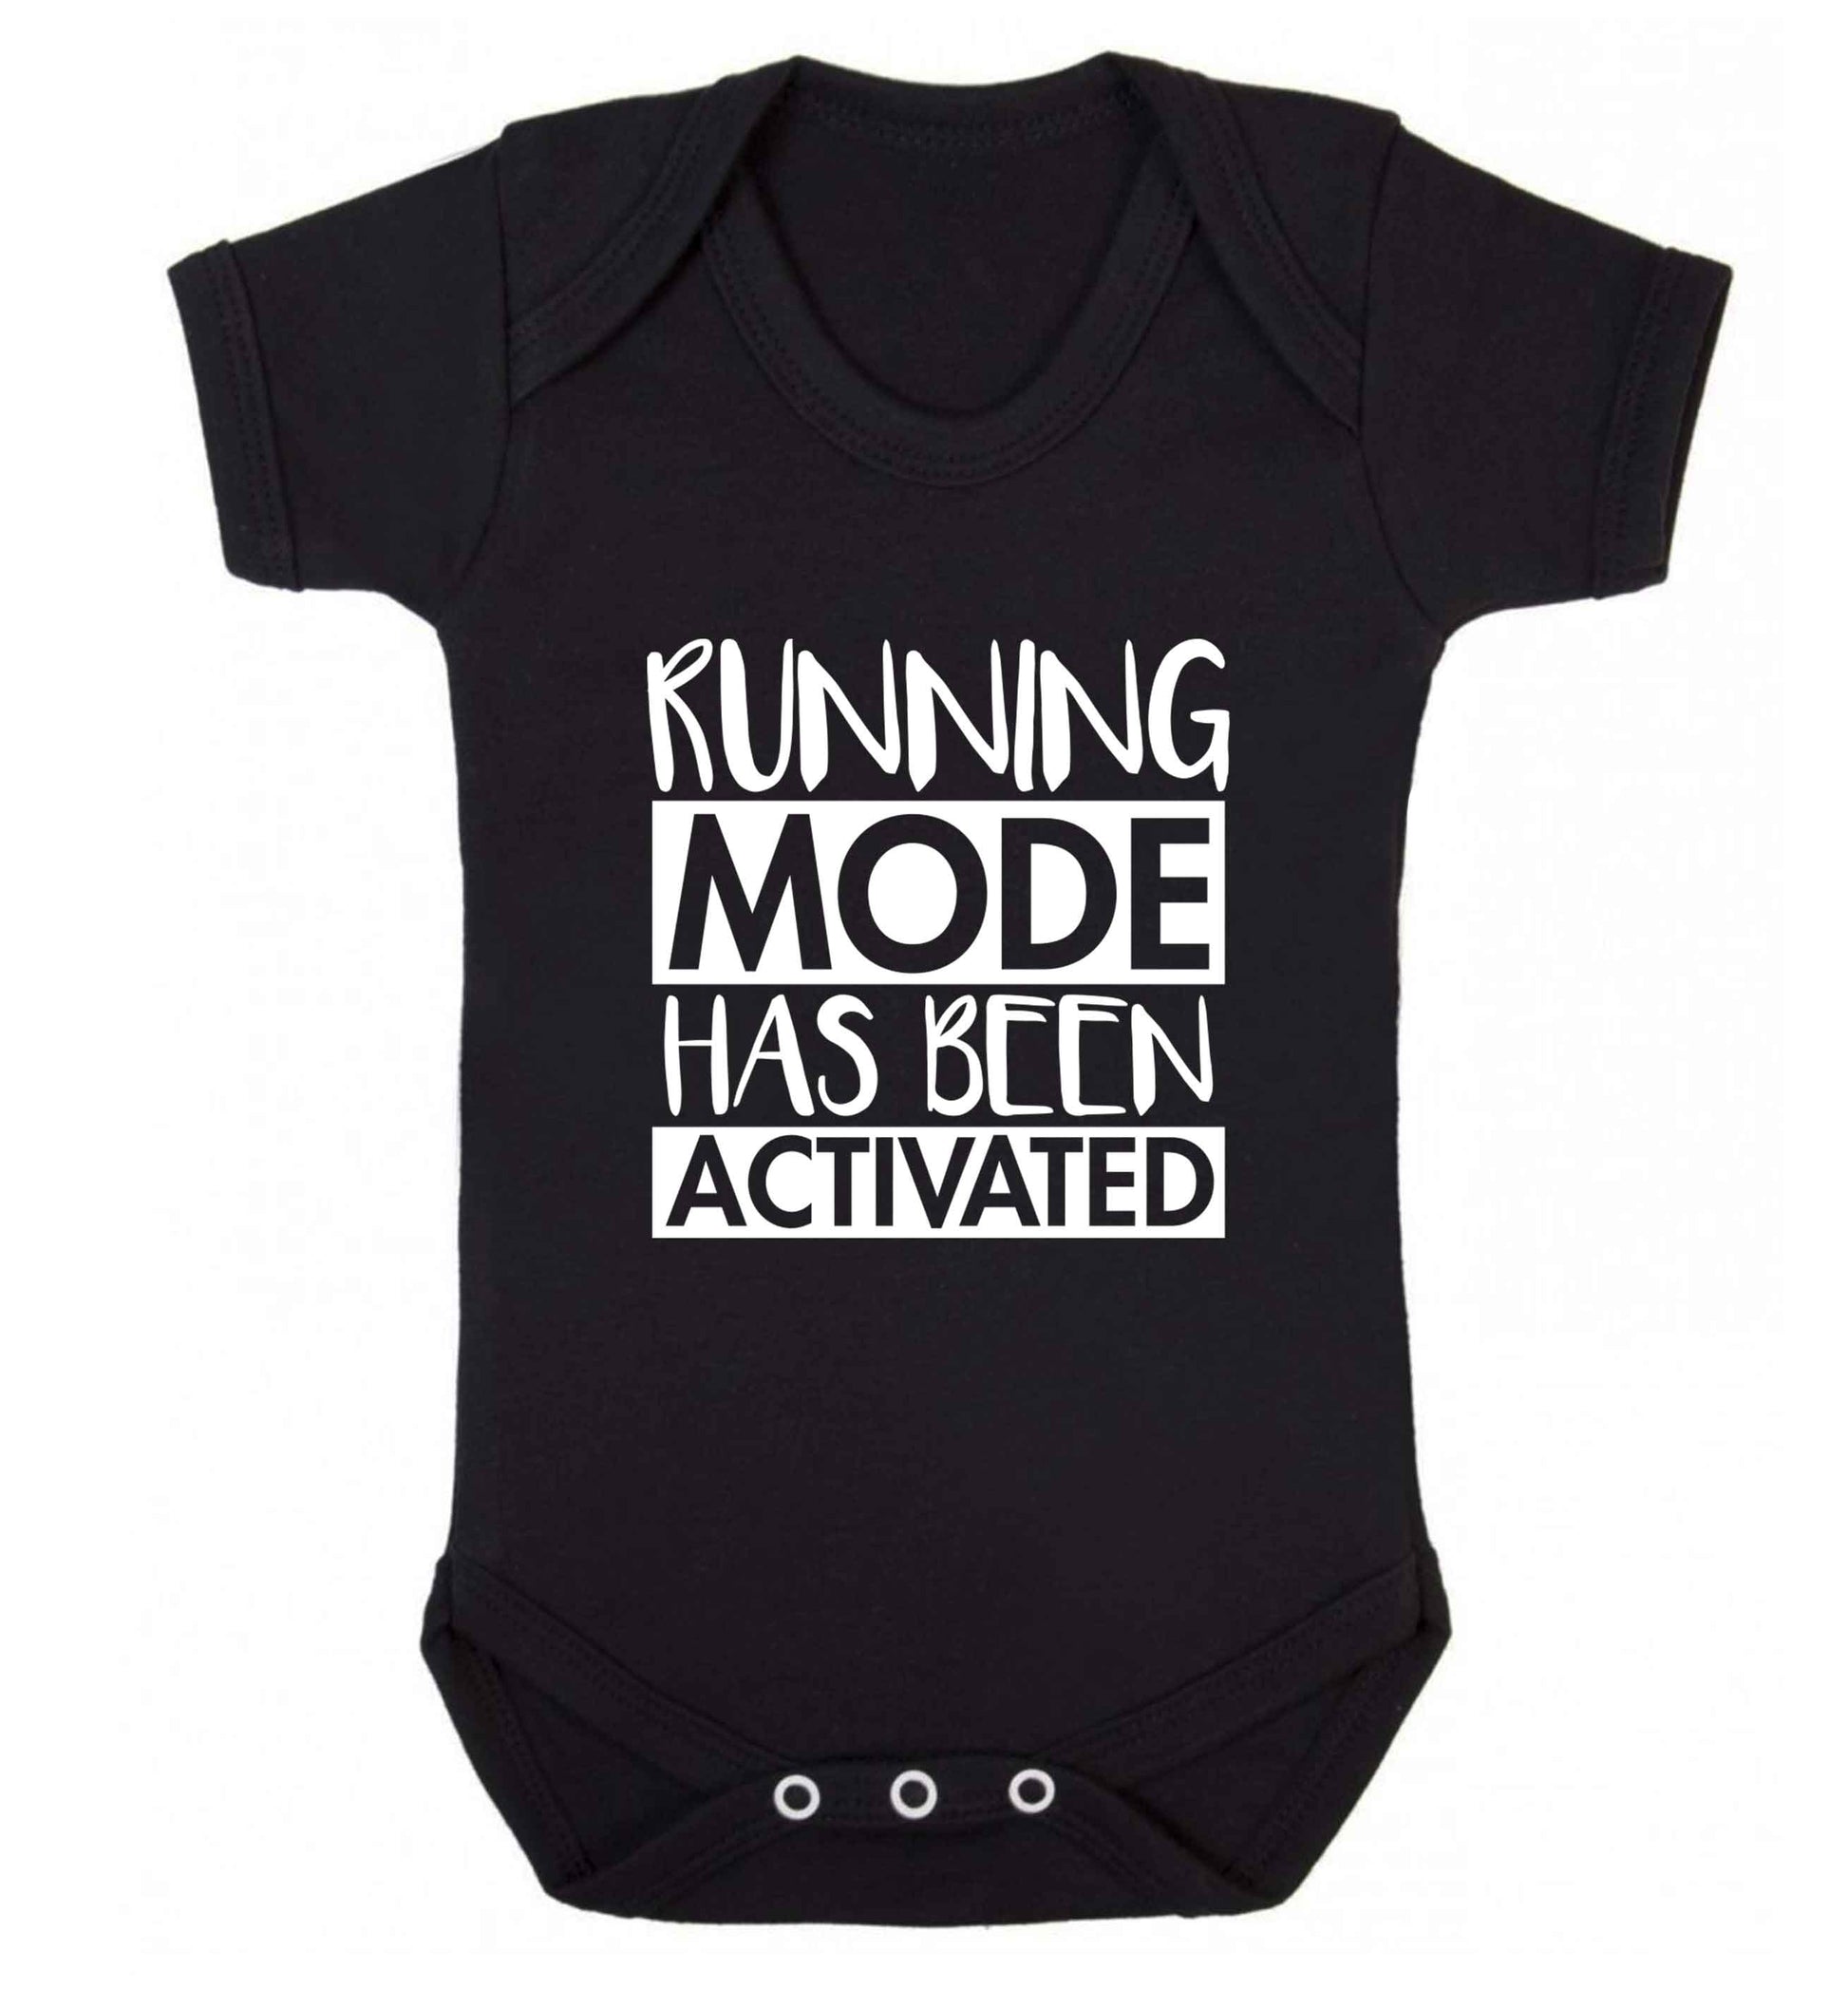 Running mode has been activated baby vest black 18-24 months